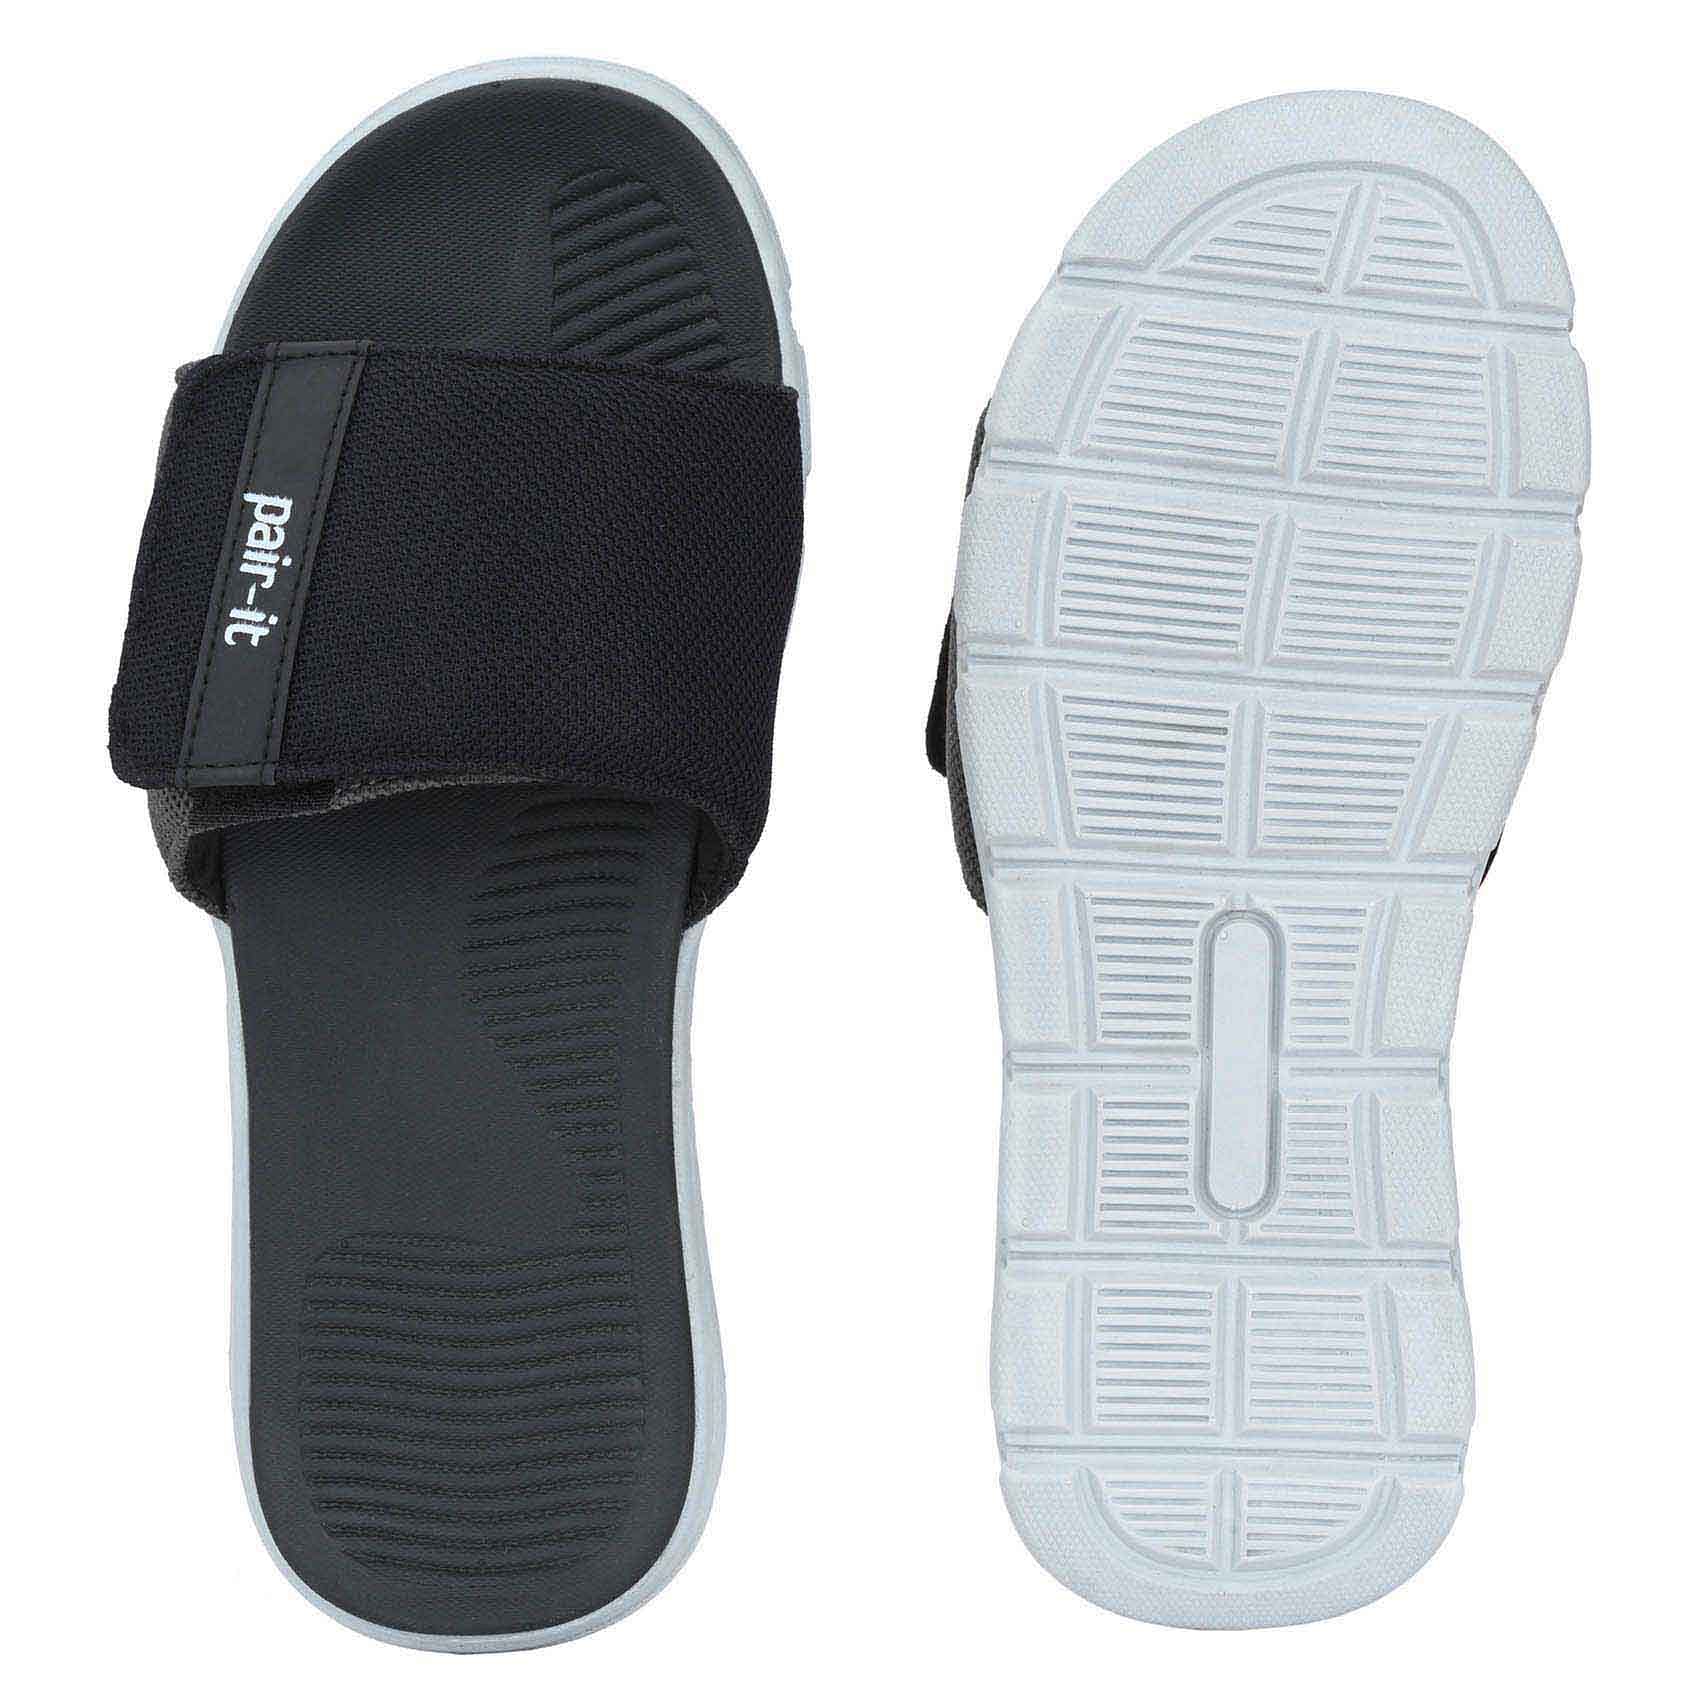 Pair-it Men's Rubberised EVA Slippers-LZ-Slippers125-Black/Grey